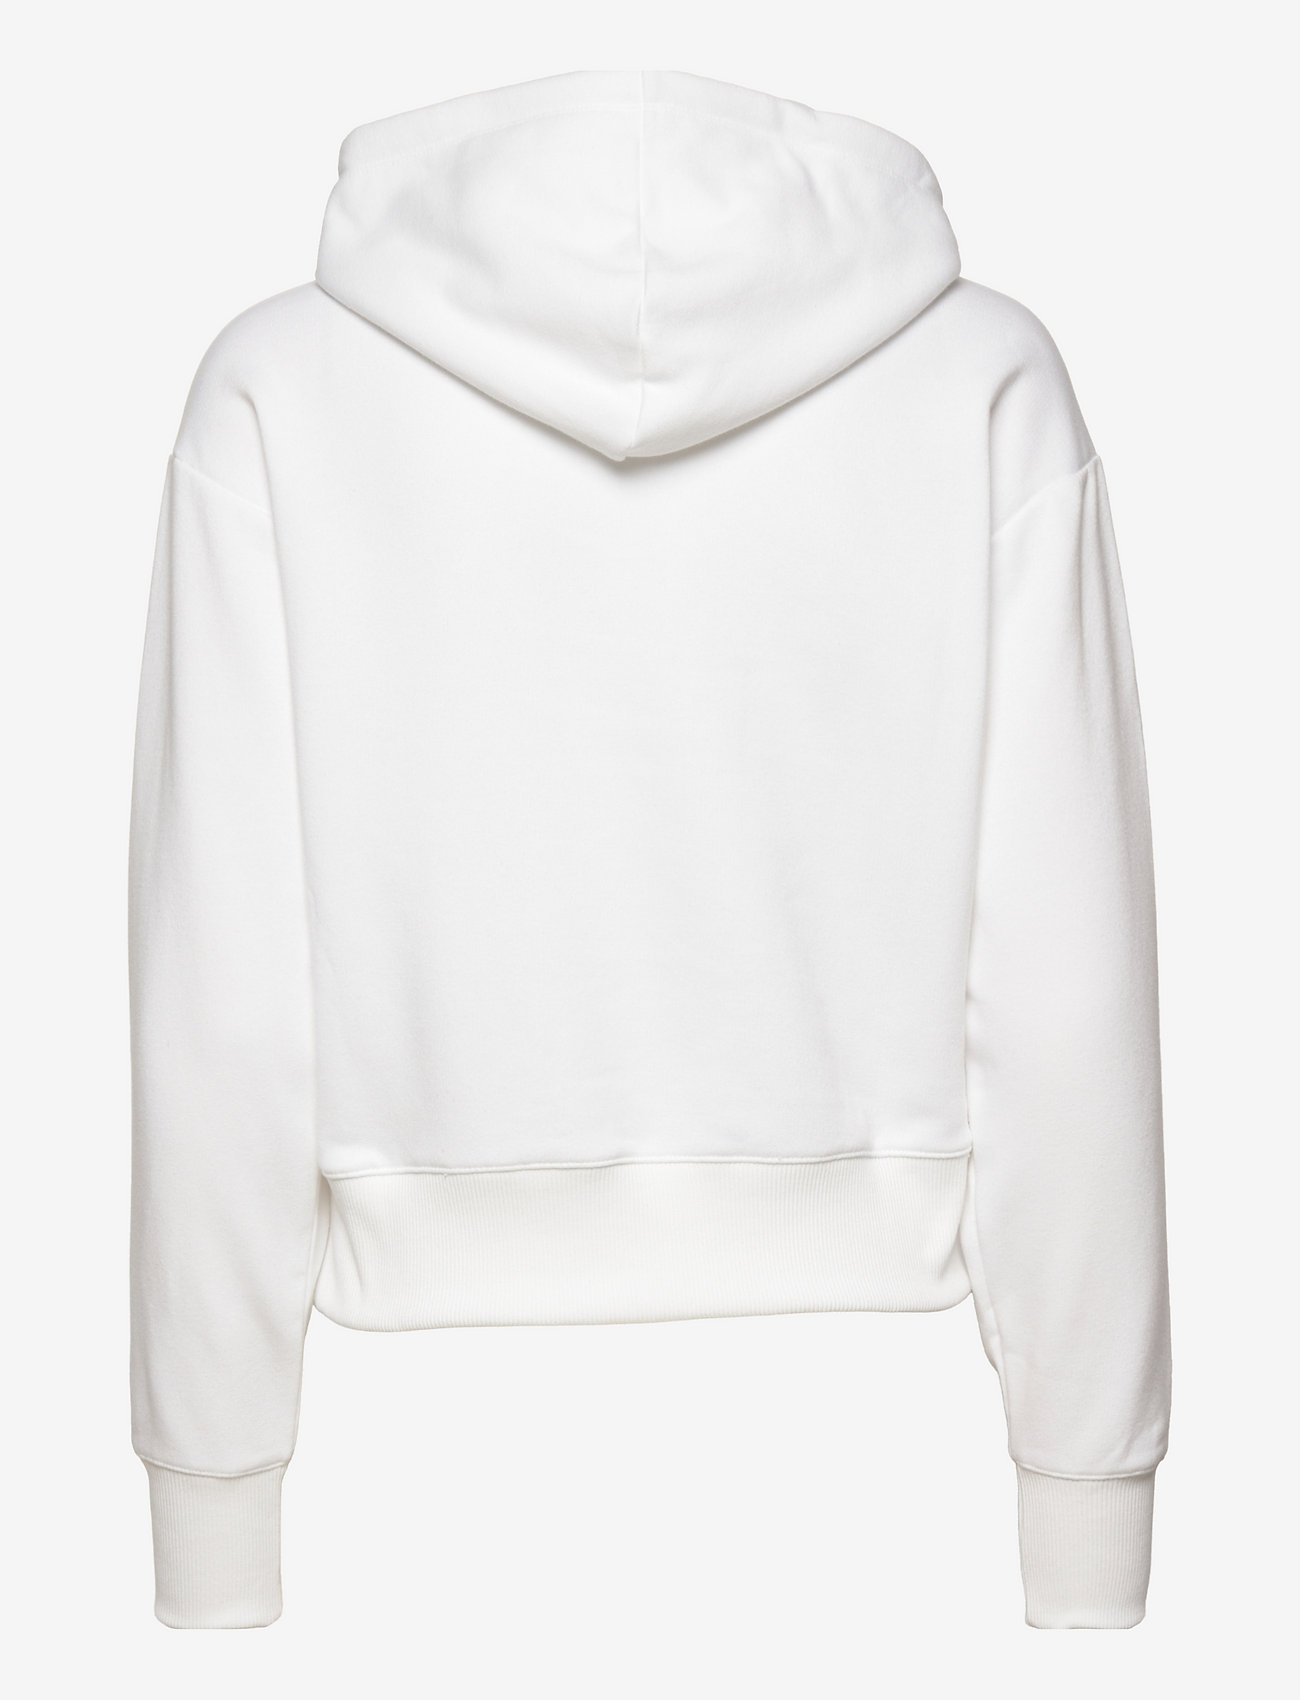 New White Plain Hoodie Hooded Pullover Sweatshirt Solid White Fleece Cotton M-2X